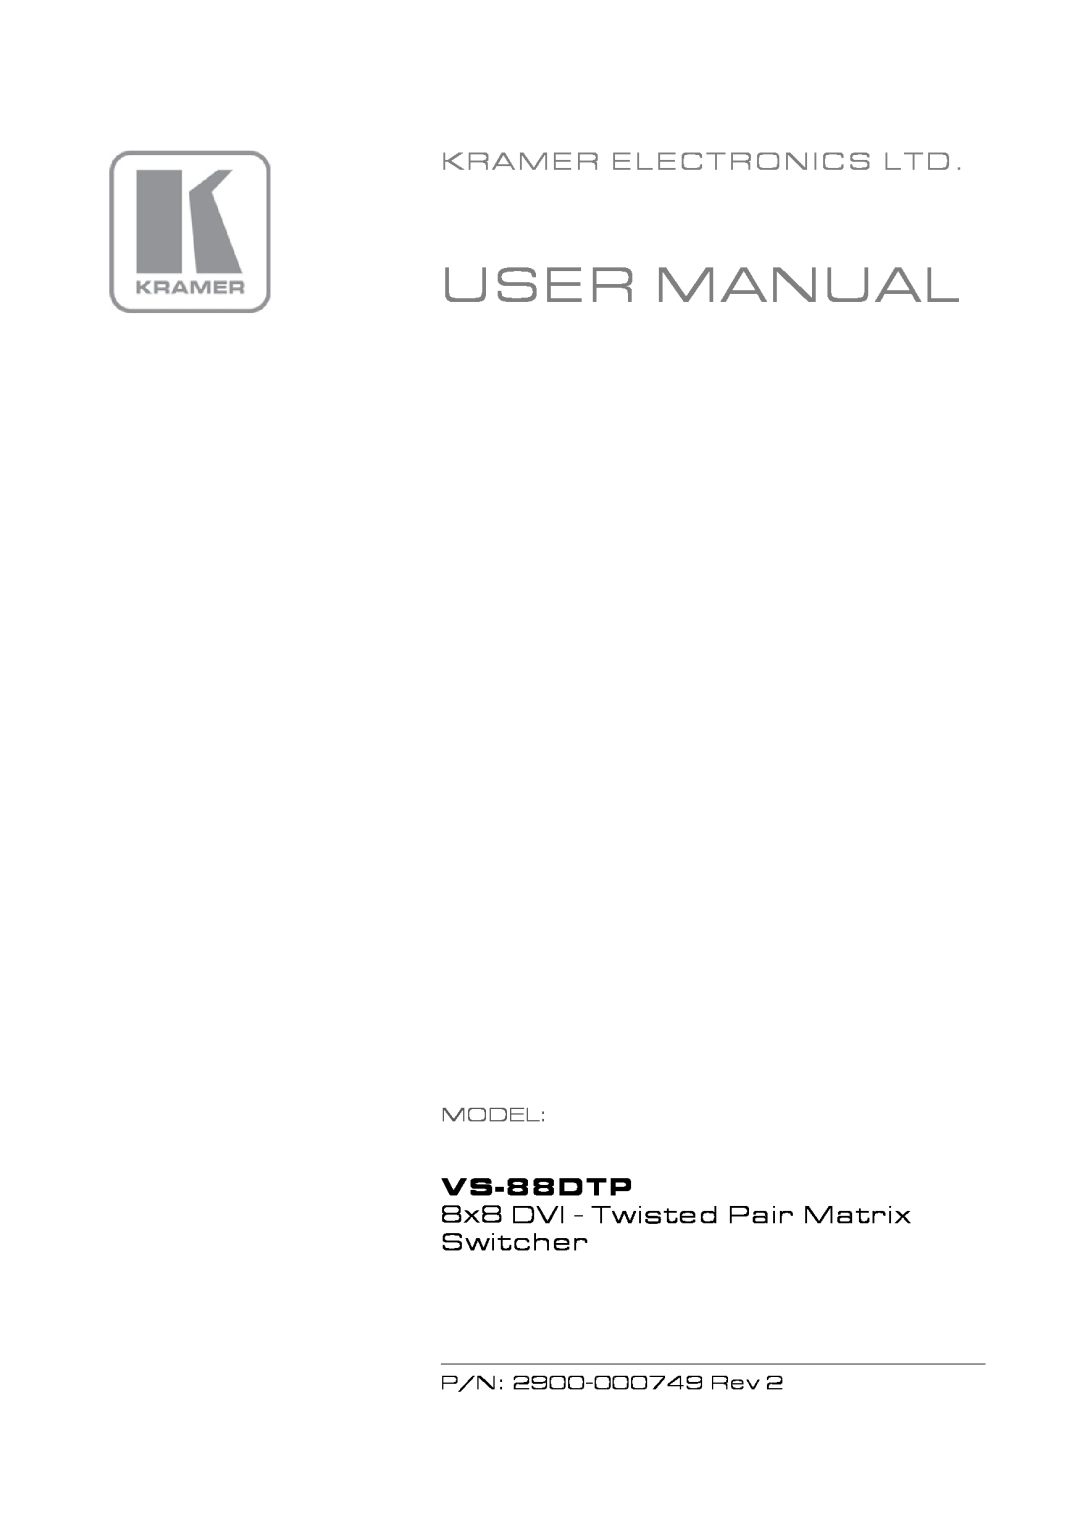 Kramer Electronics VS-88DTP user manual User Manual, 8x8 DVI - Twisted Pair Matrix Switcher, Model 